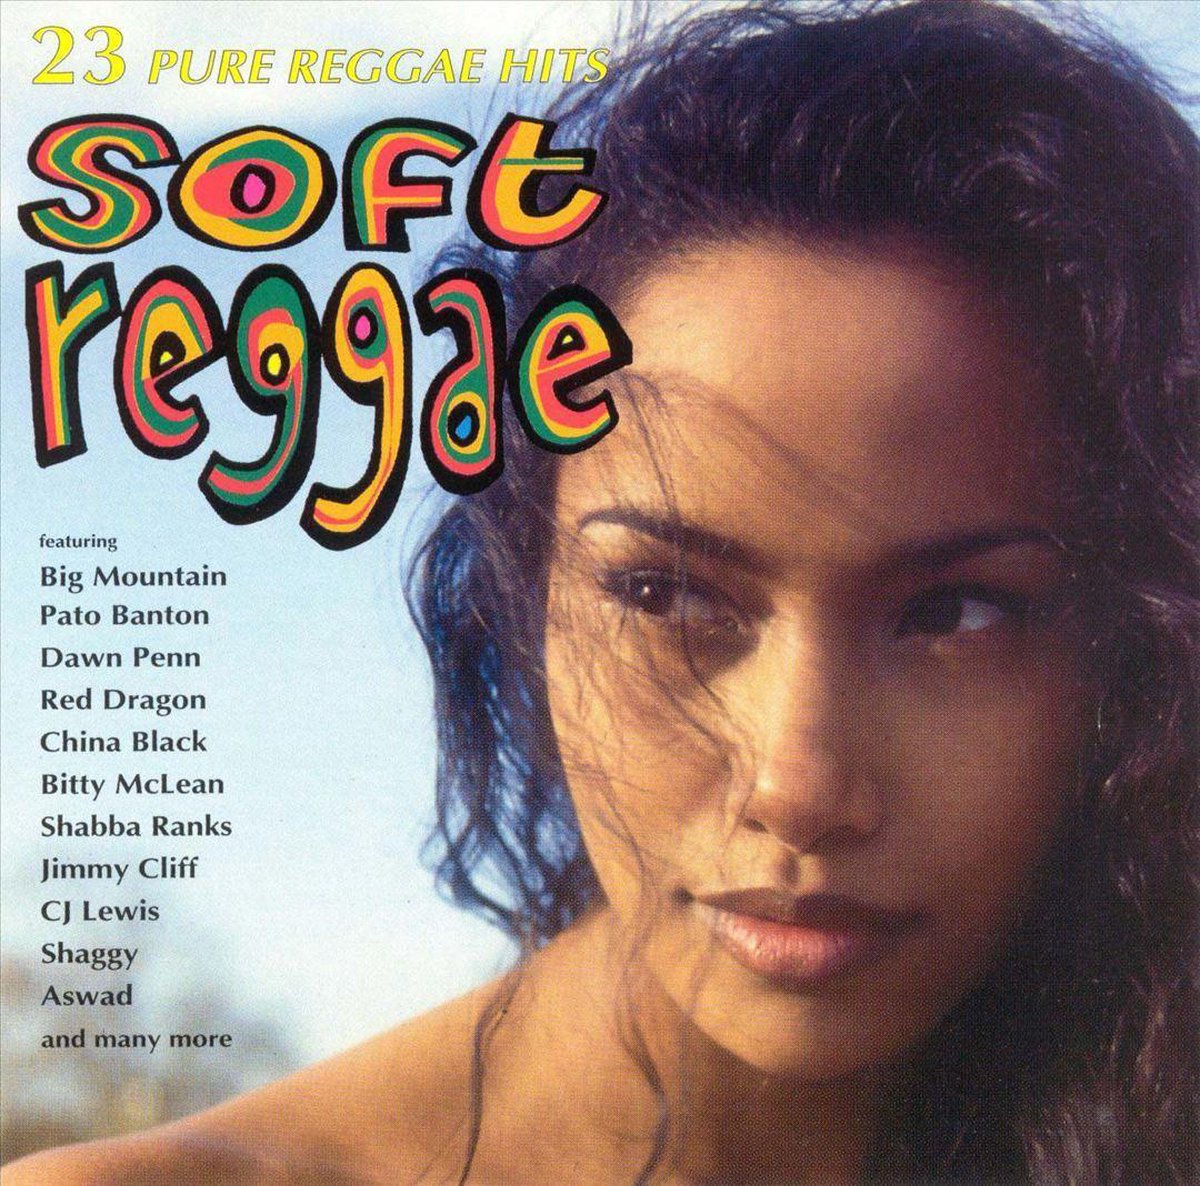 Soft Reggae - various artists